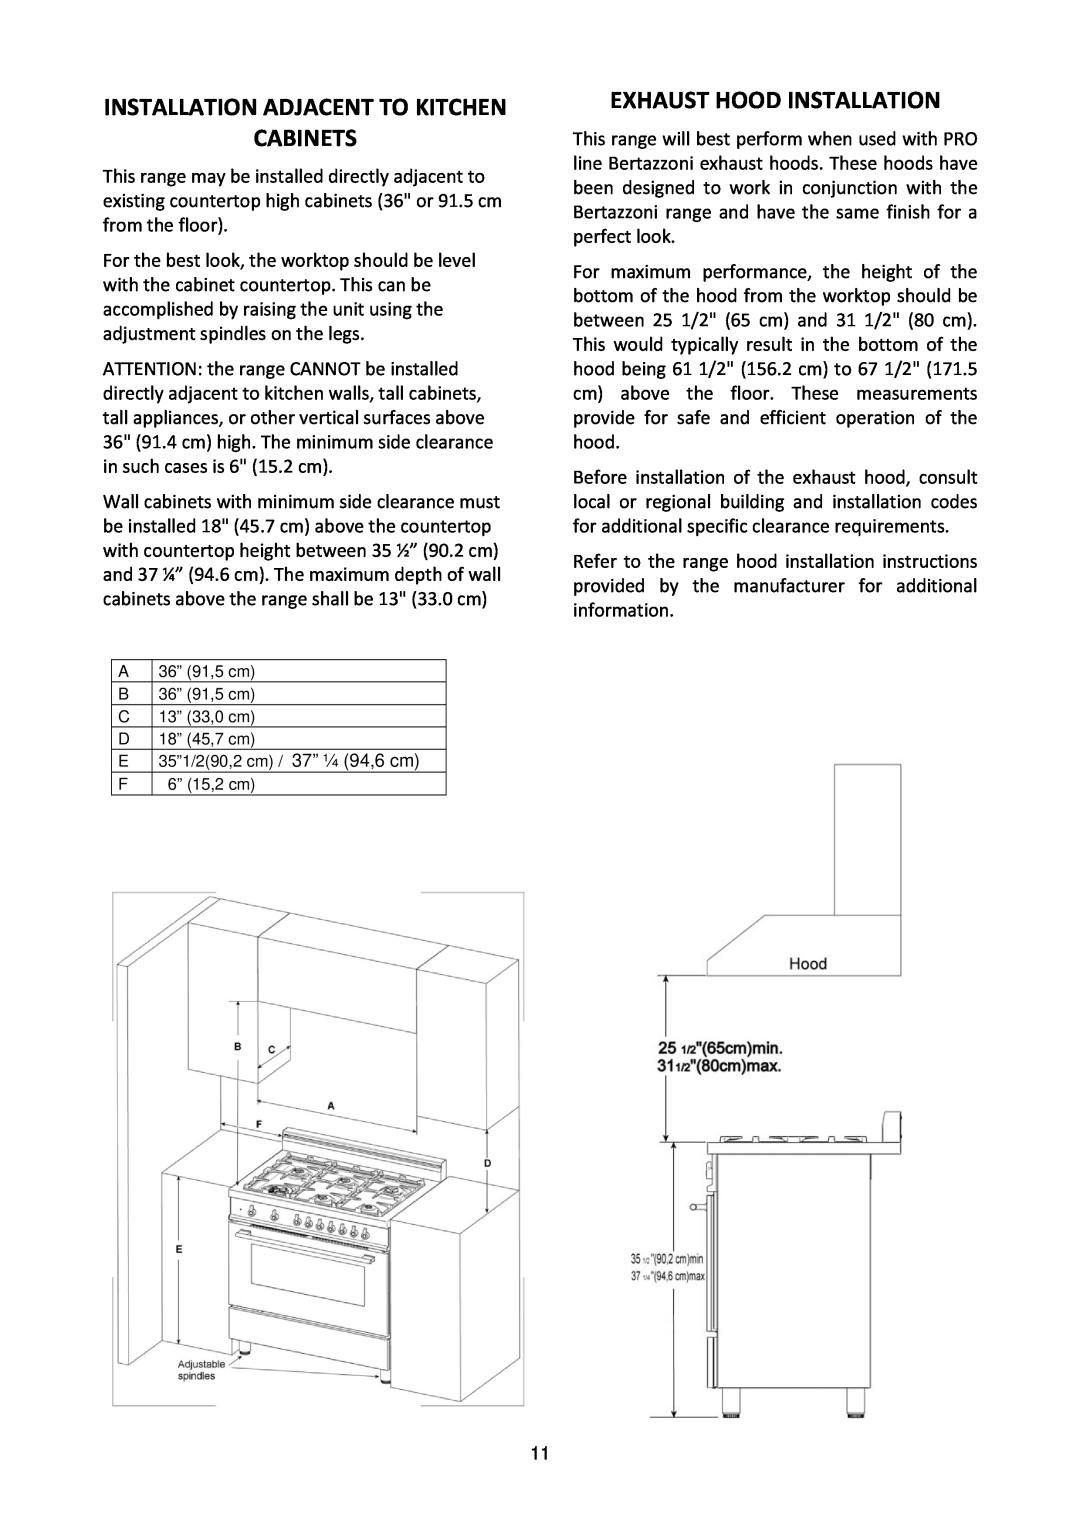 Bertazzoni MAS365GASXT, MAS365GASXE manual Installation Adjacent To Kitchen Cabinets, Exhaust Hood Installation 